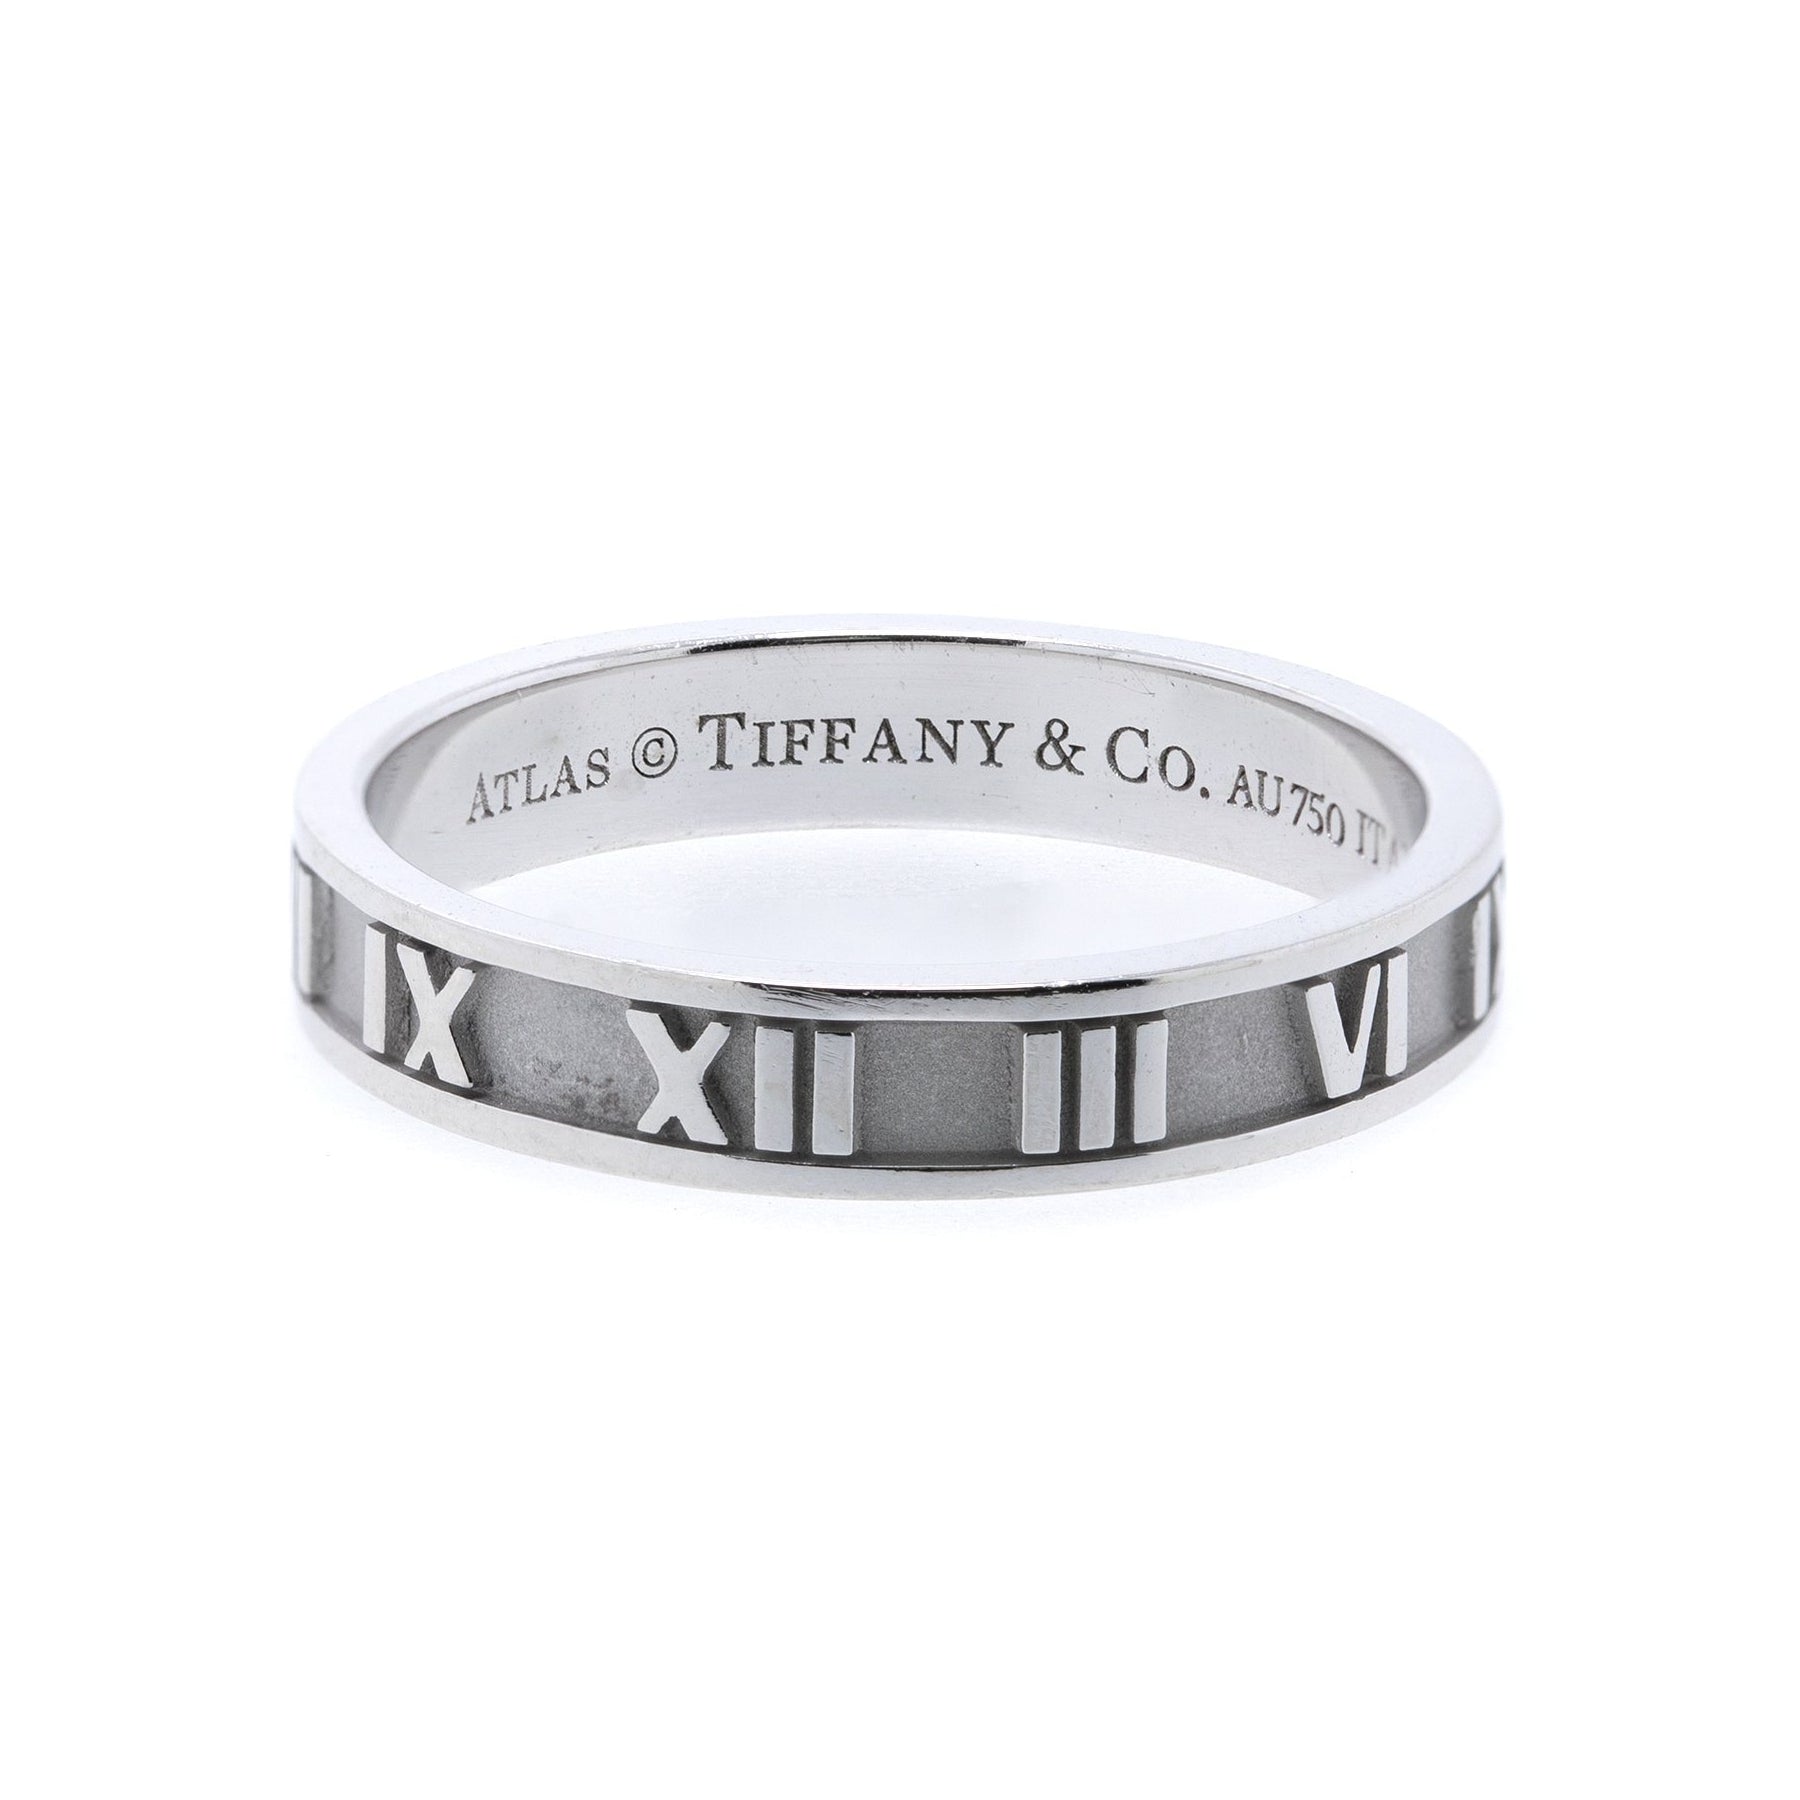 Tiffany & Co. atlas Ring – Beccas Bags